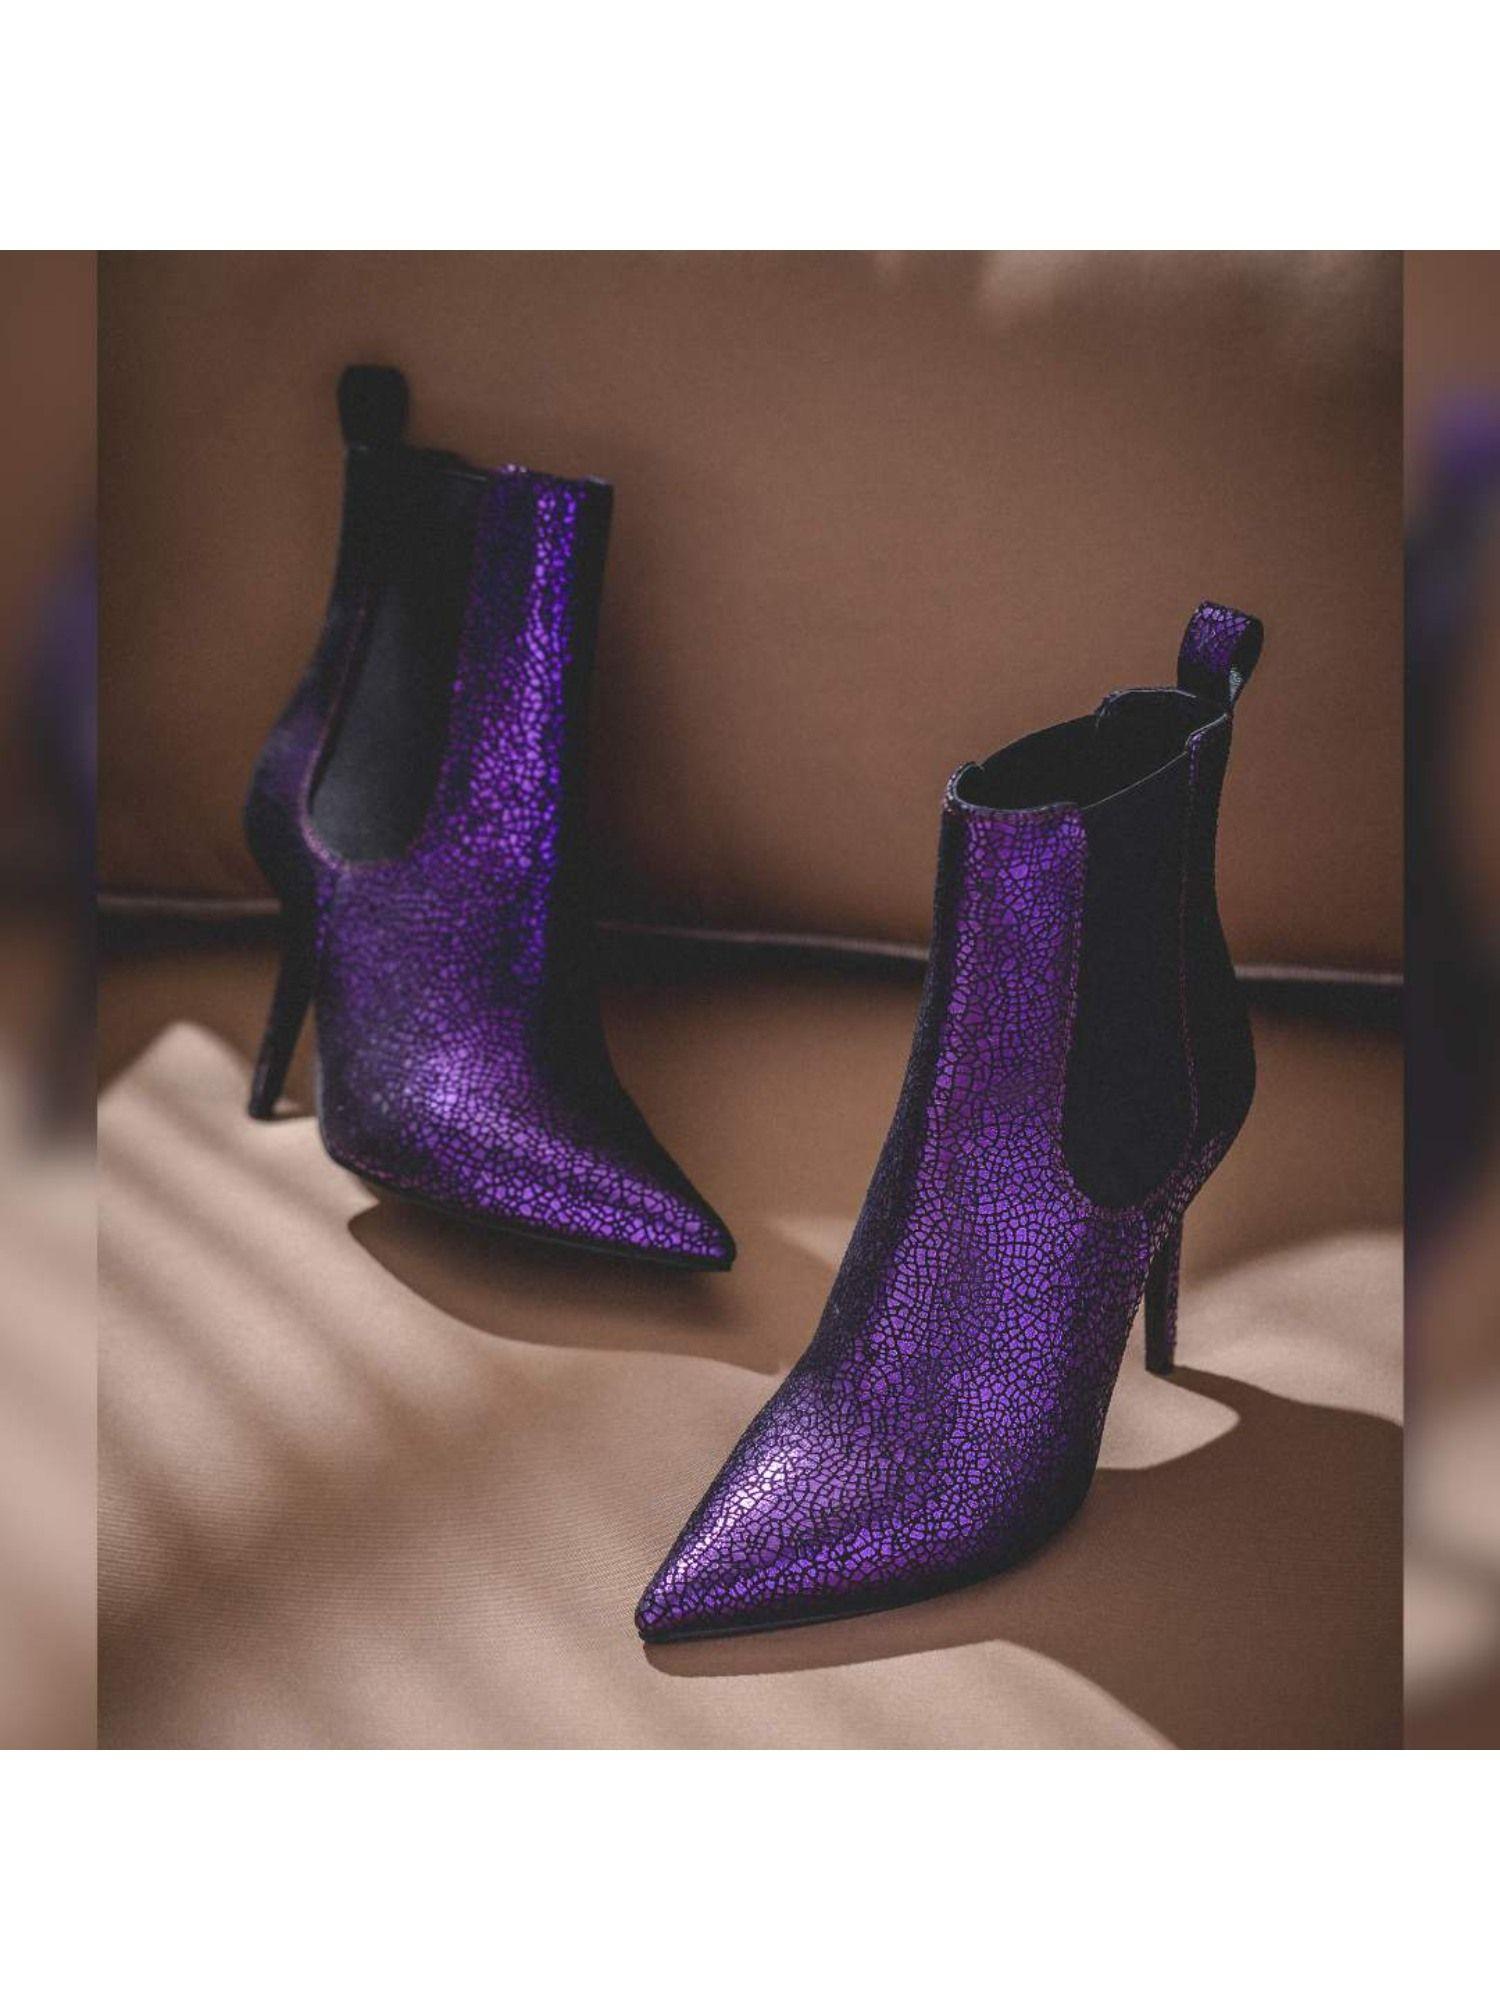 arely purple leather kitten heel boots